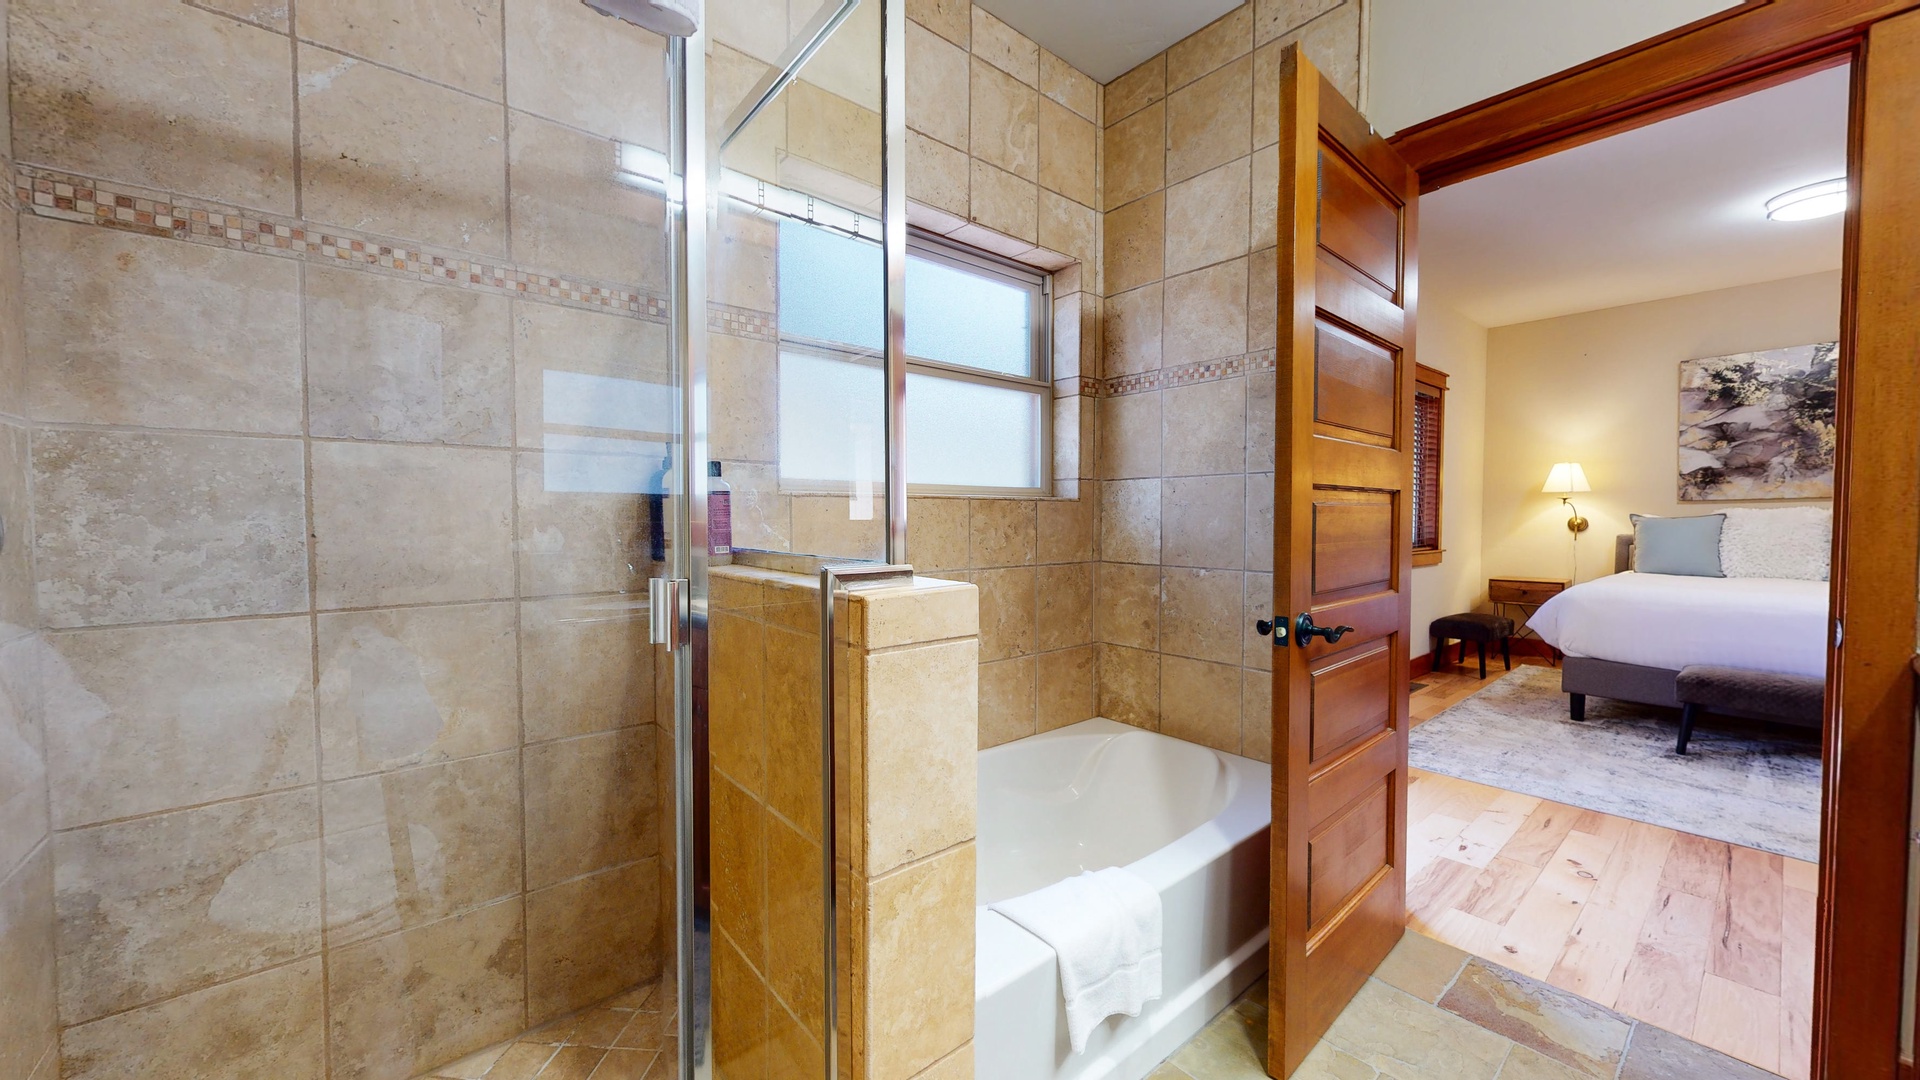 En suite bathroom with soaking tub, standing shower and dual sinks